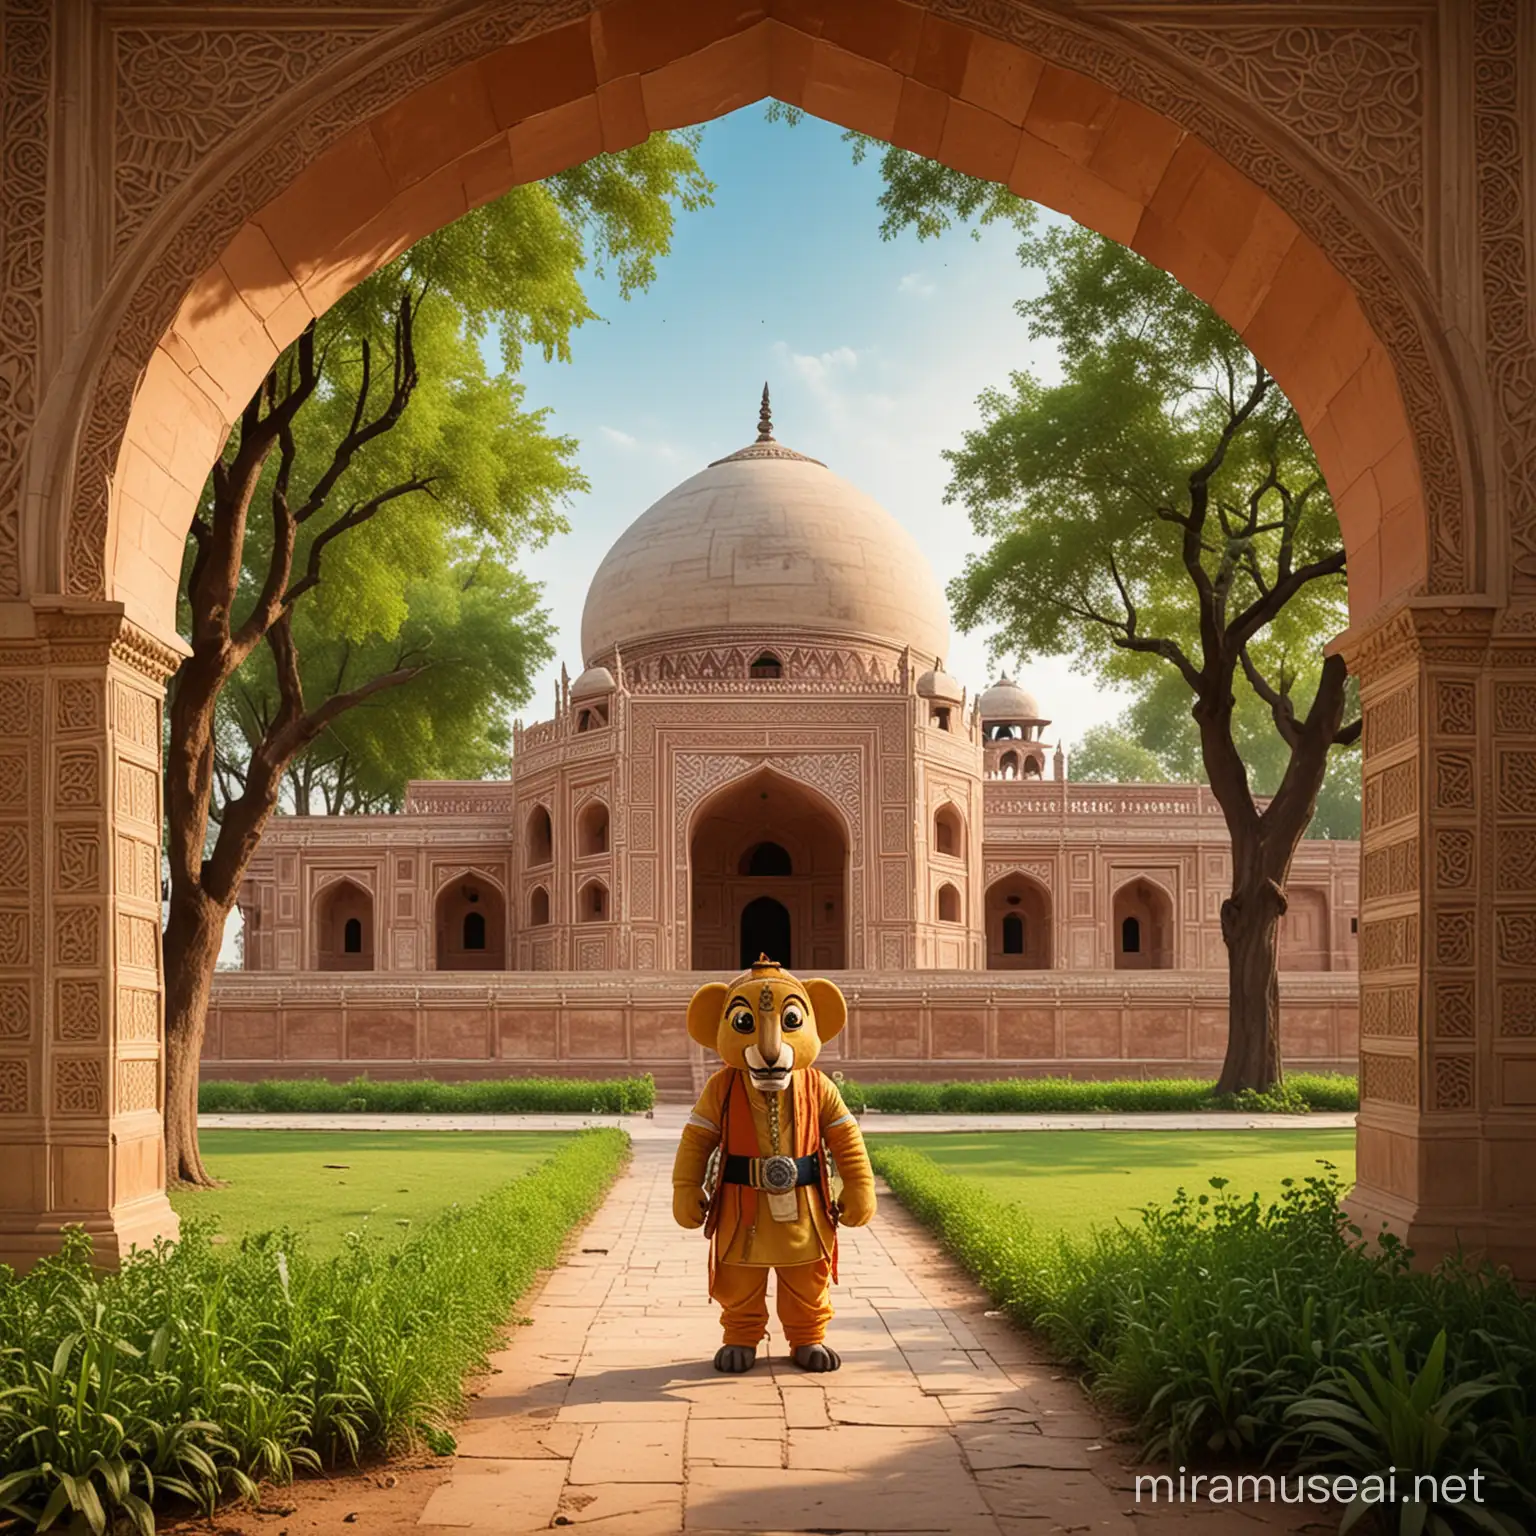 NatureInspired Mascot for Delhis Humayuns Tomb Heritage